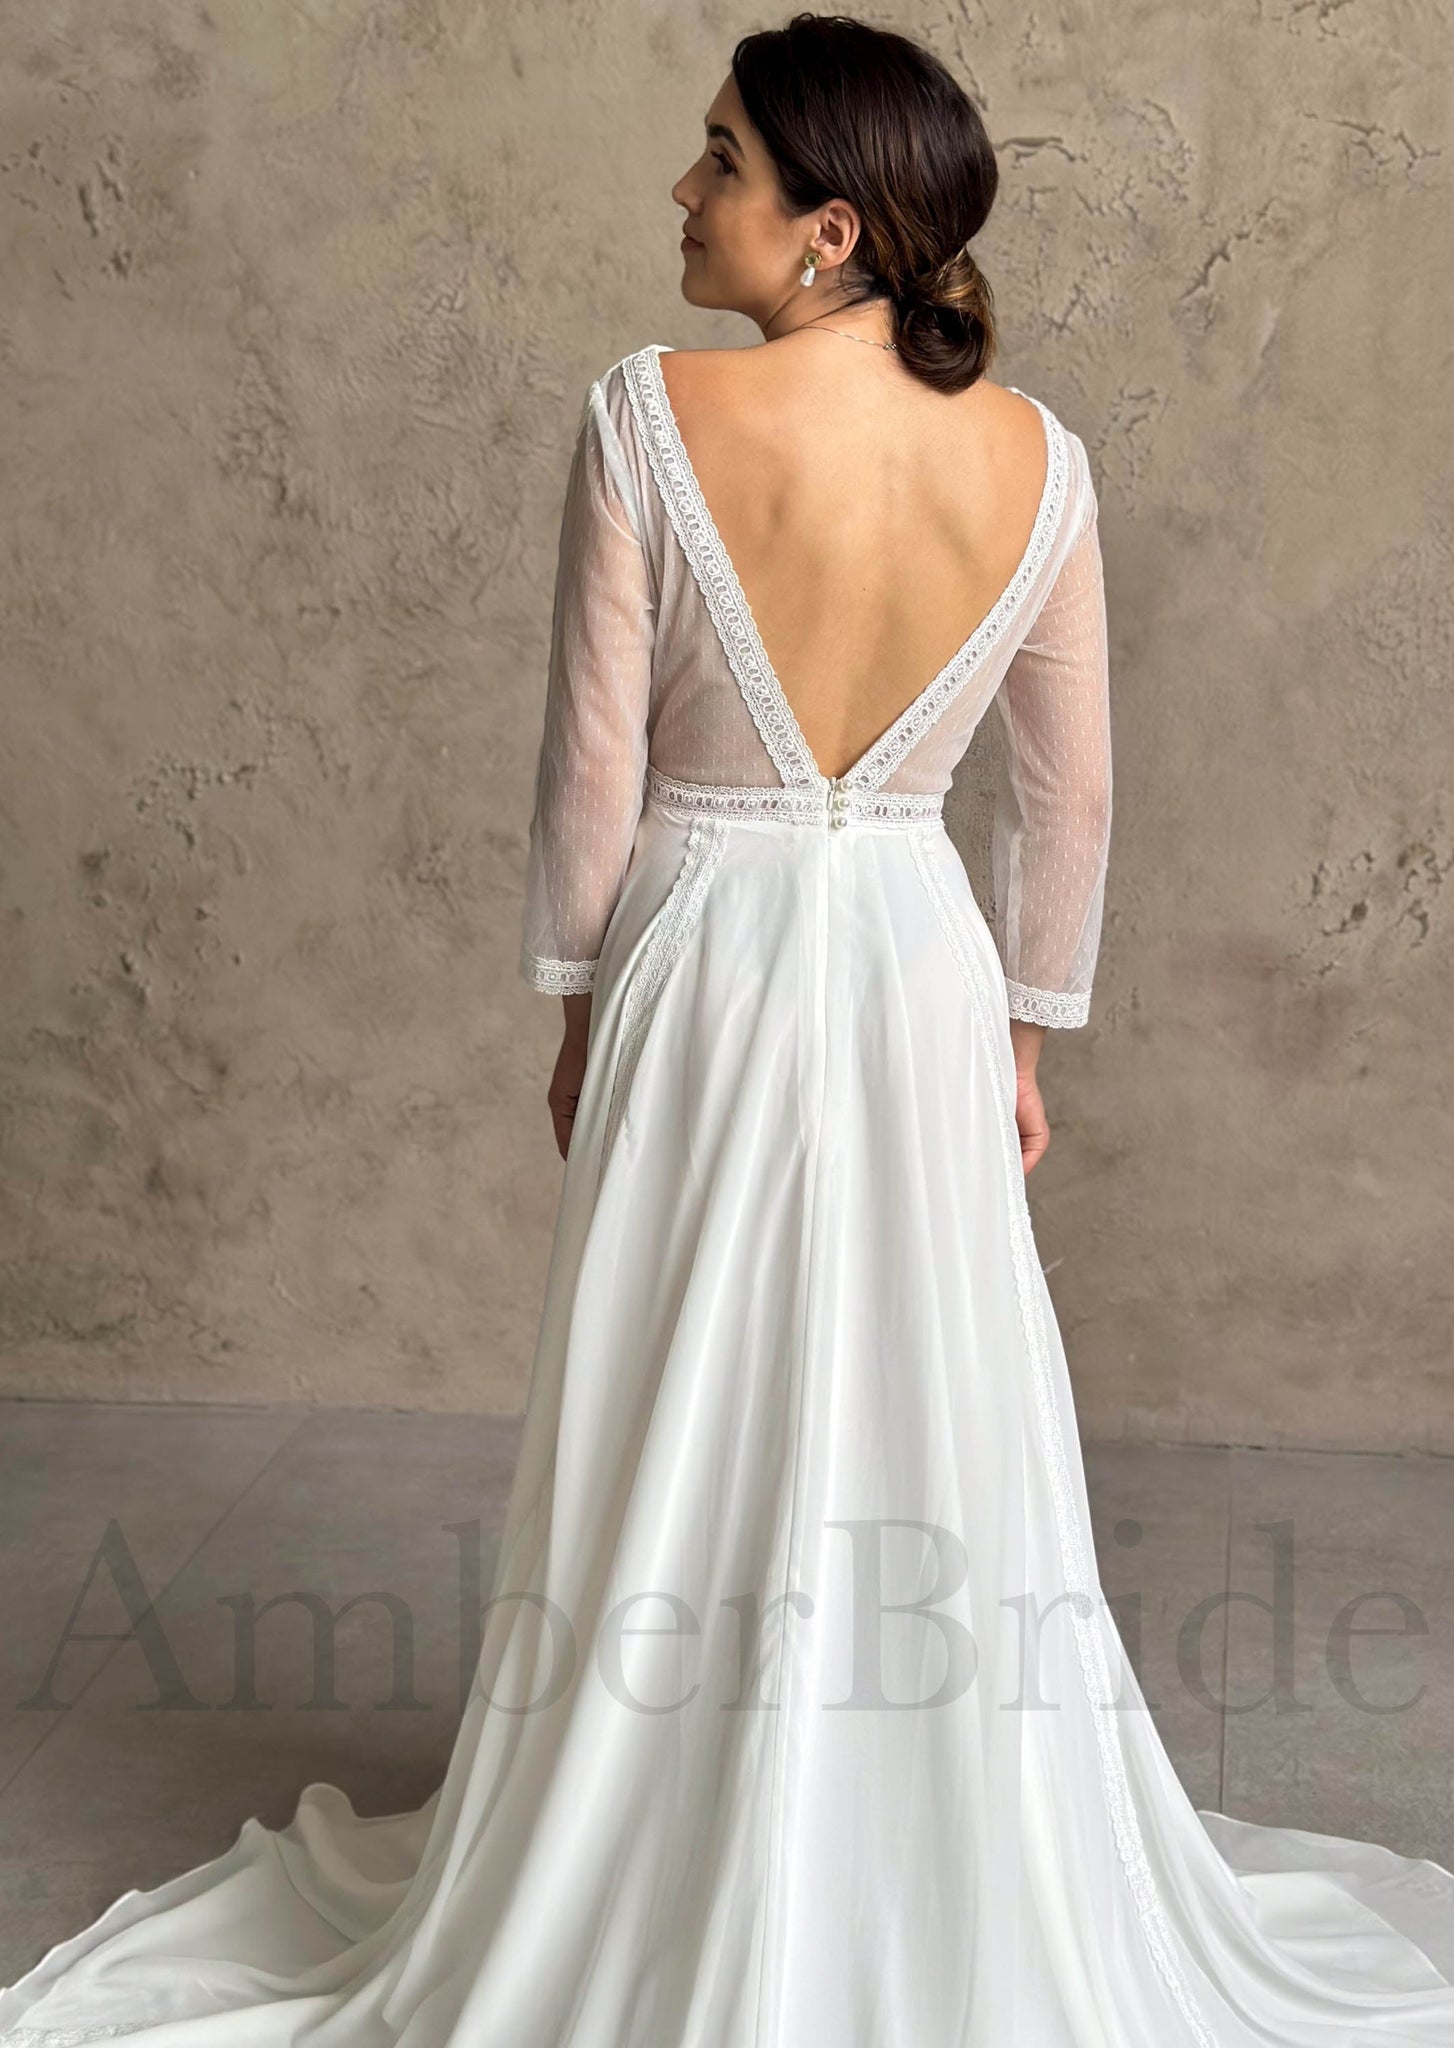 Simple A Line Chiffon Wedding Dress with Long Sleeve and Boho Elements